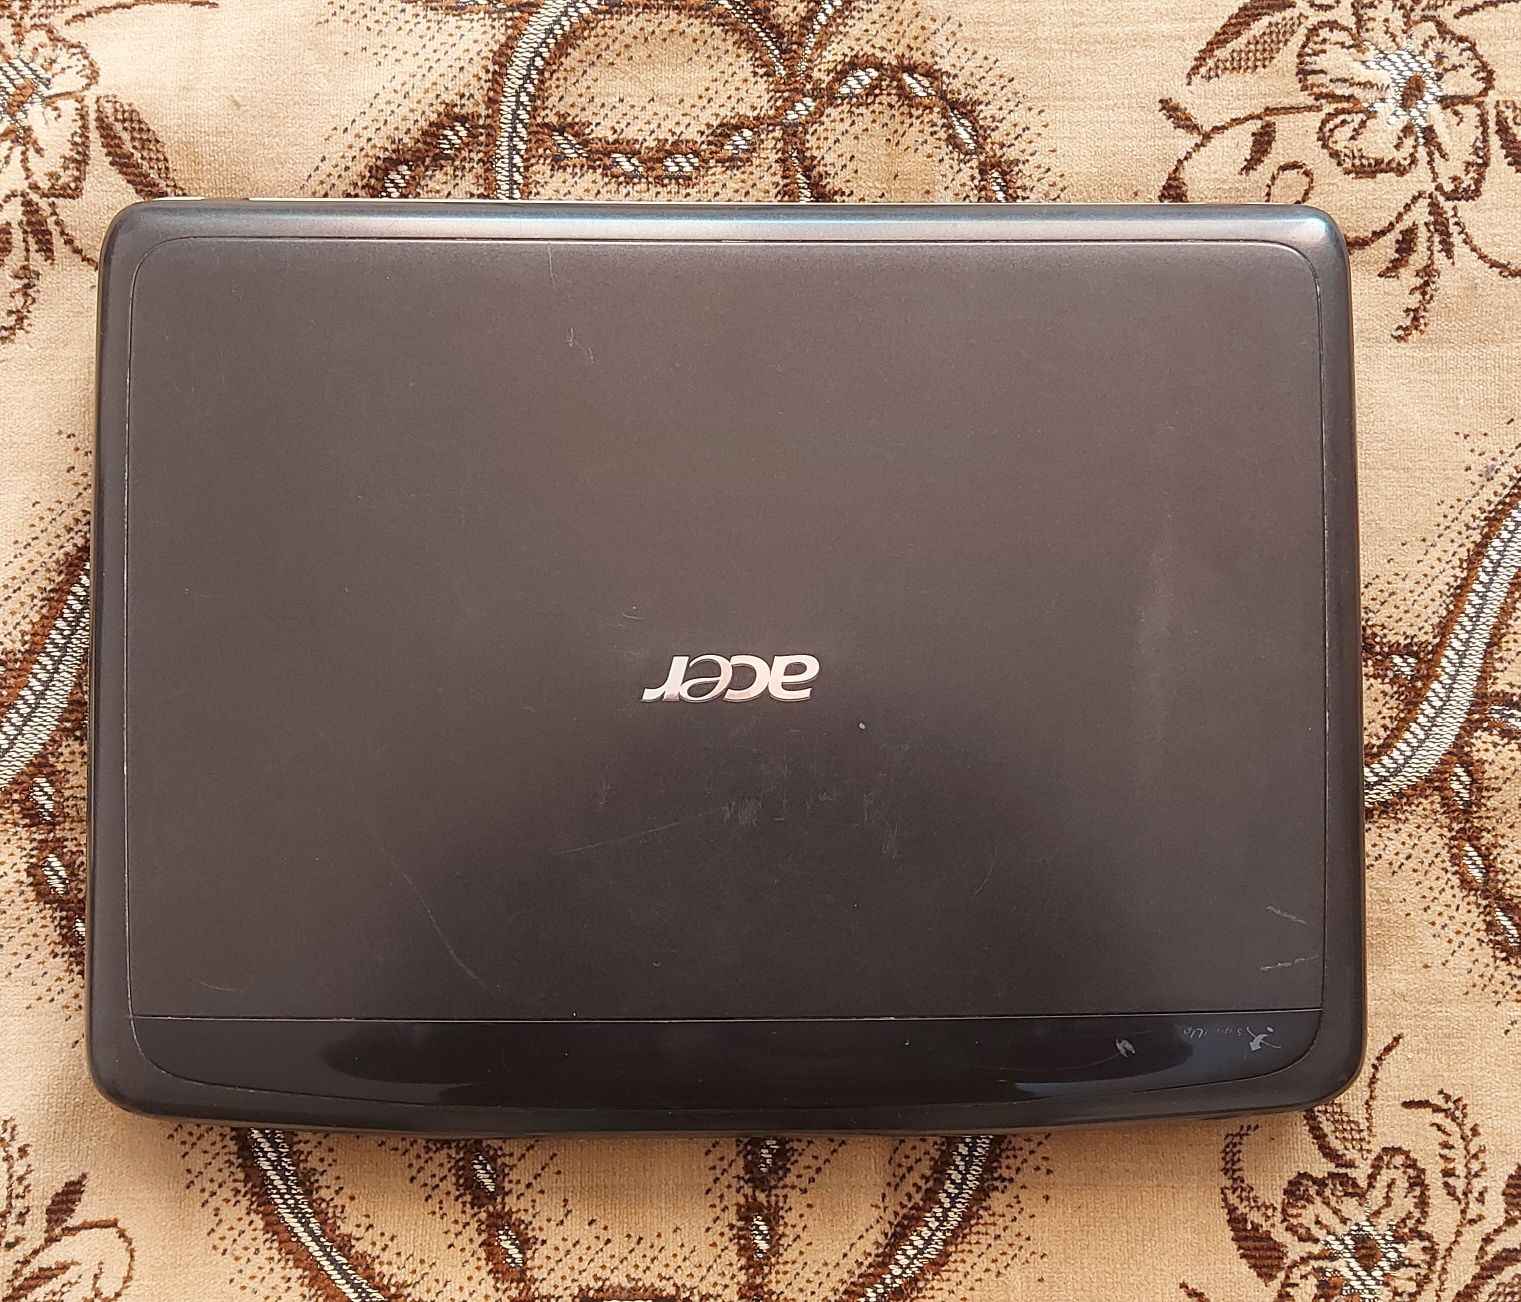 Laptop Acer Aspire 5315 - Celeron 1,73 Ghz, 2GB, 320 HDD, DVD-ROM